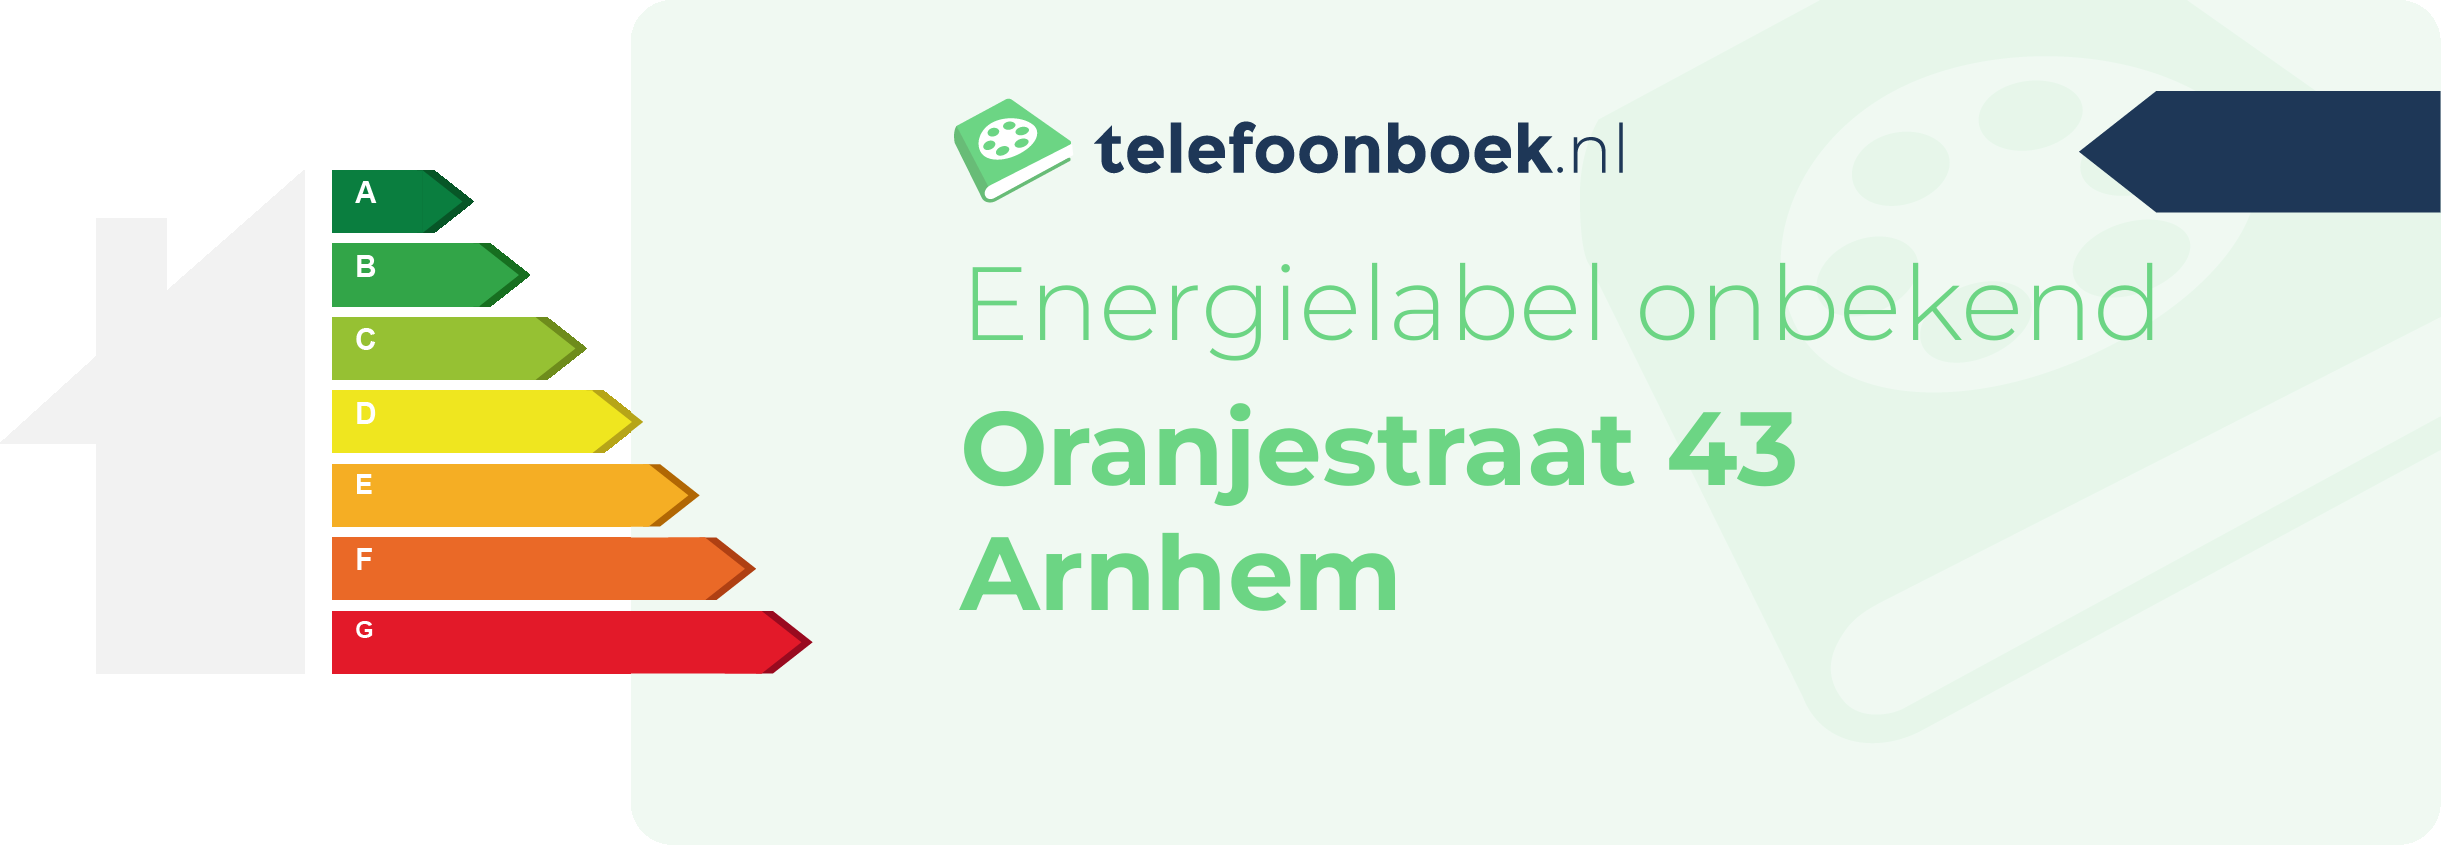 Energielabel Oranjestraat 43 Arnhem